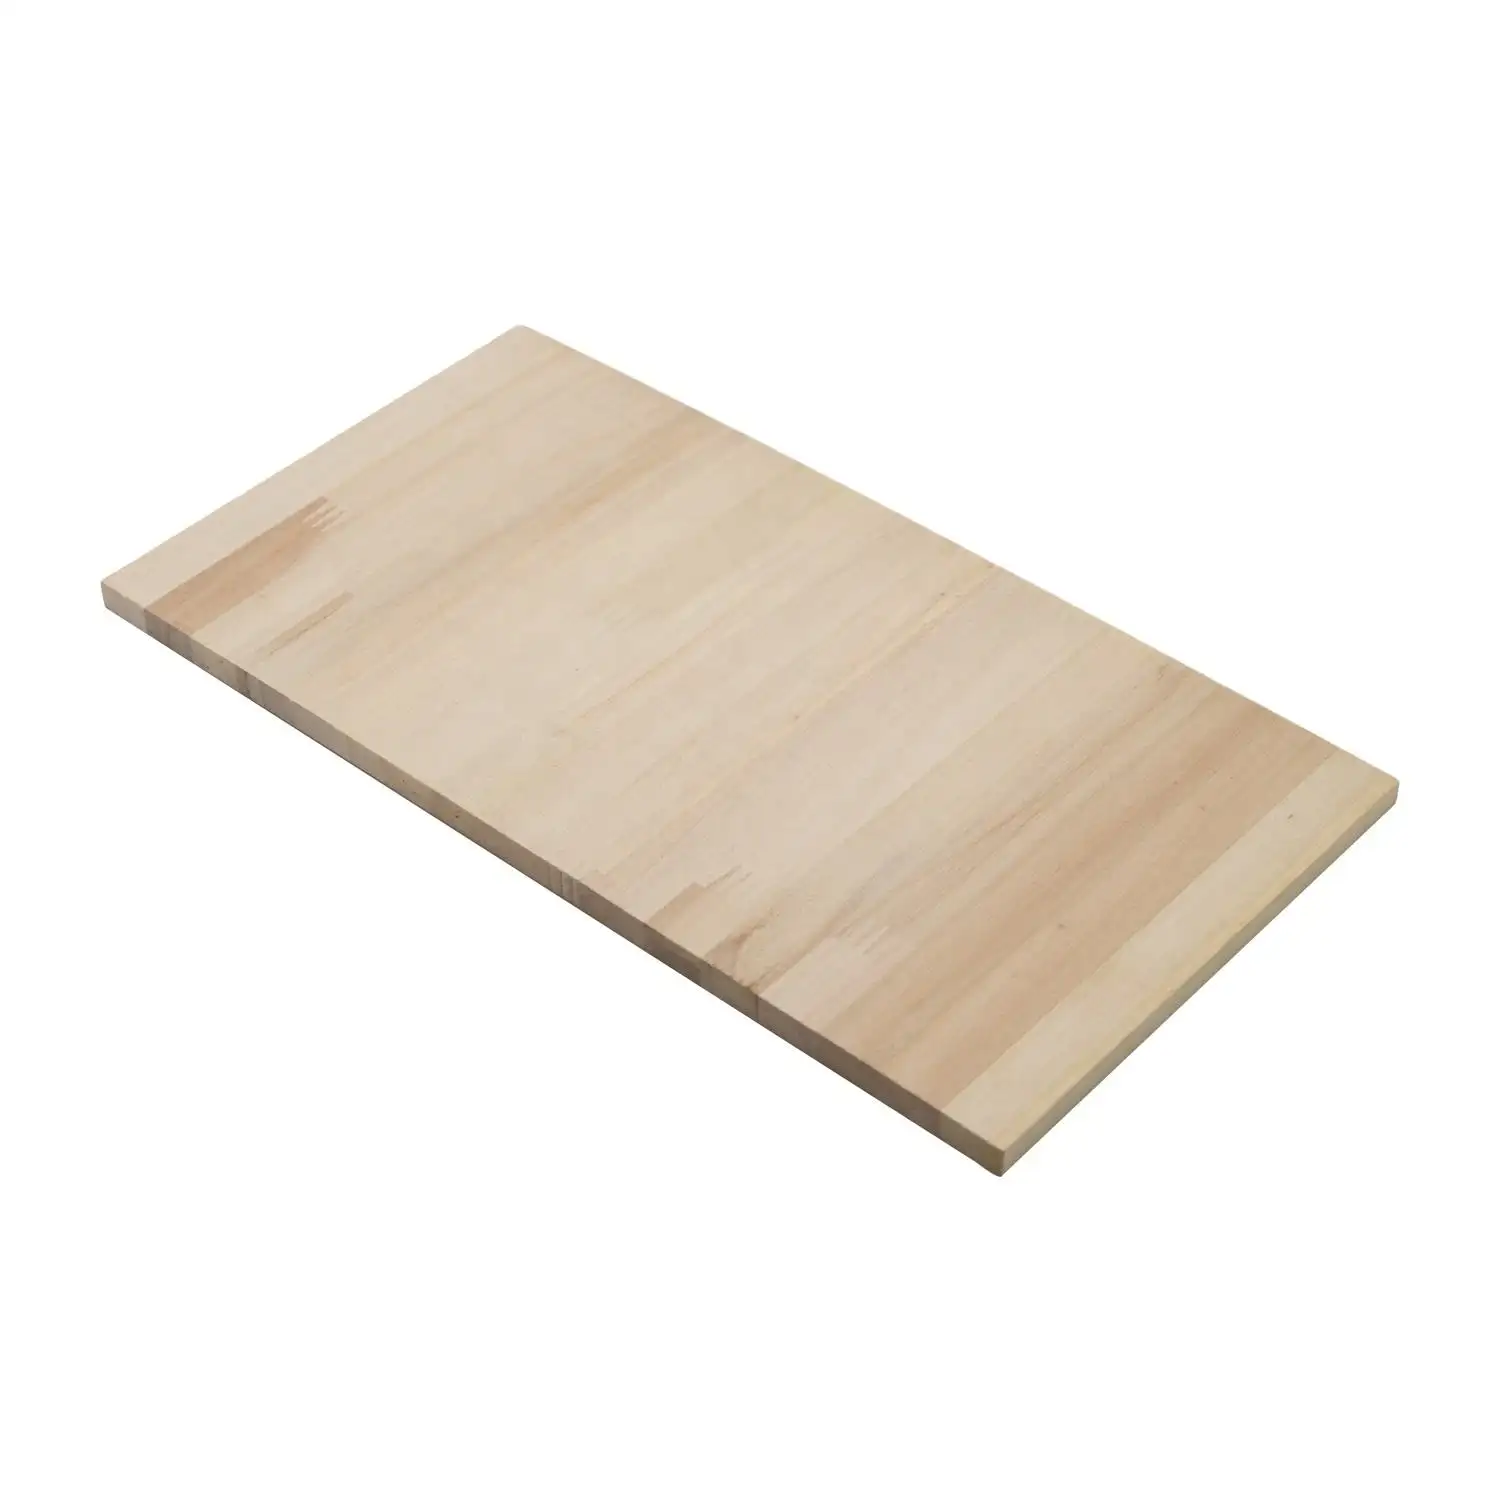 China Factory Direct Sale Paulownia Lumber/Paulownia Solid Wood Boards